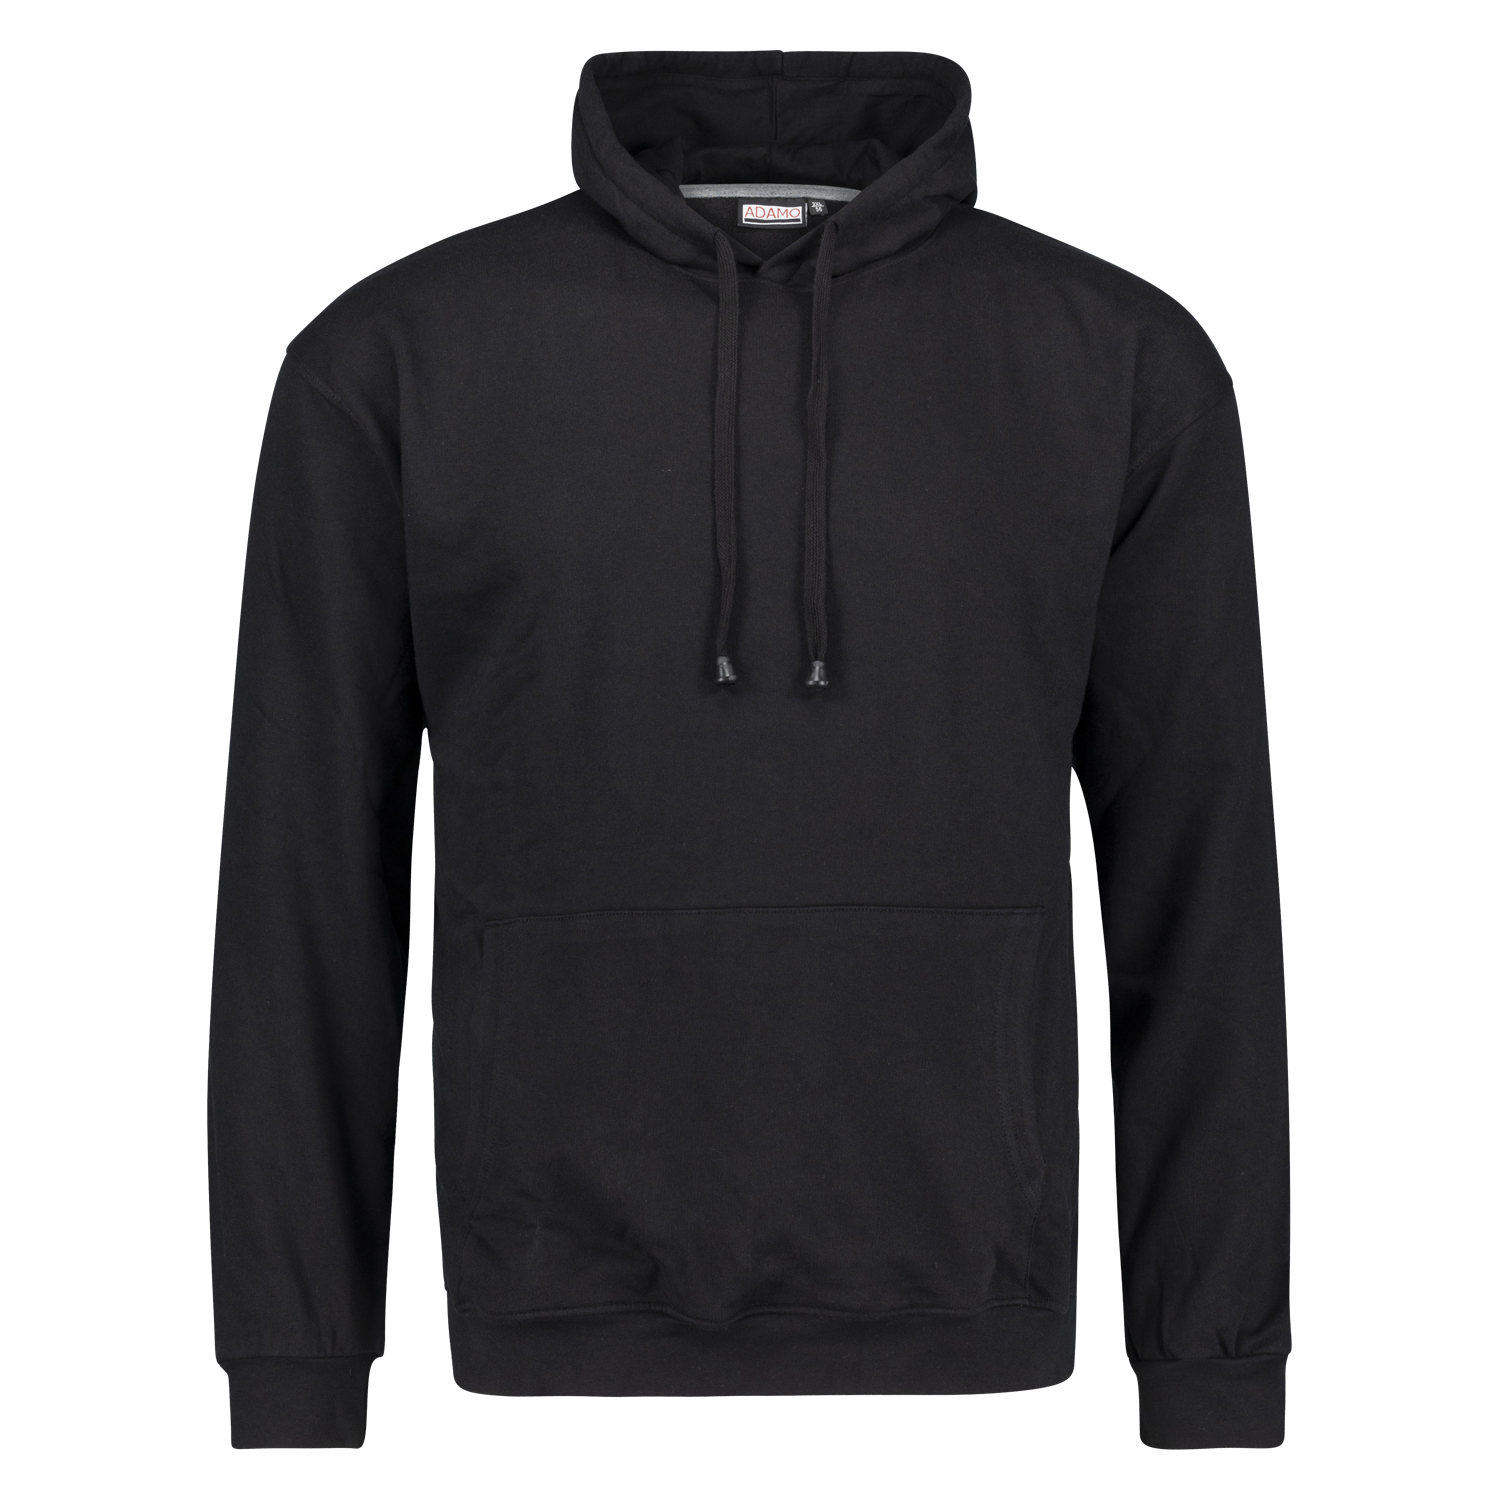 Men's Sweatshirt with hood and kangaroo pocket series Athens by Adamo in oversizes up to 14XL